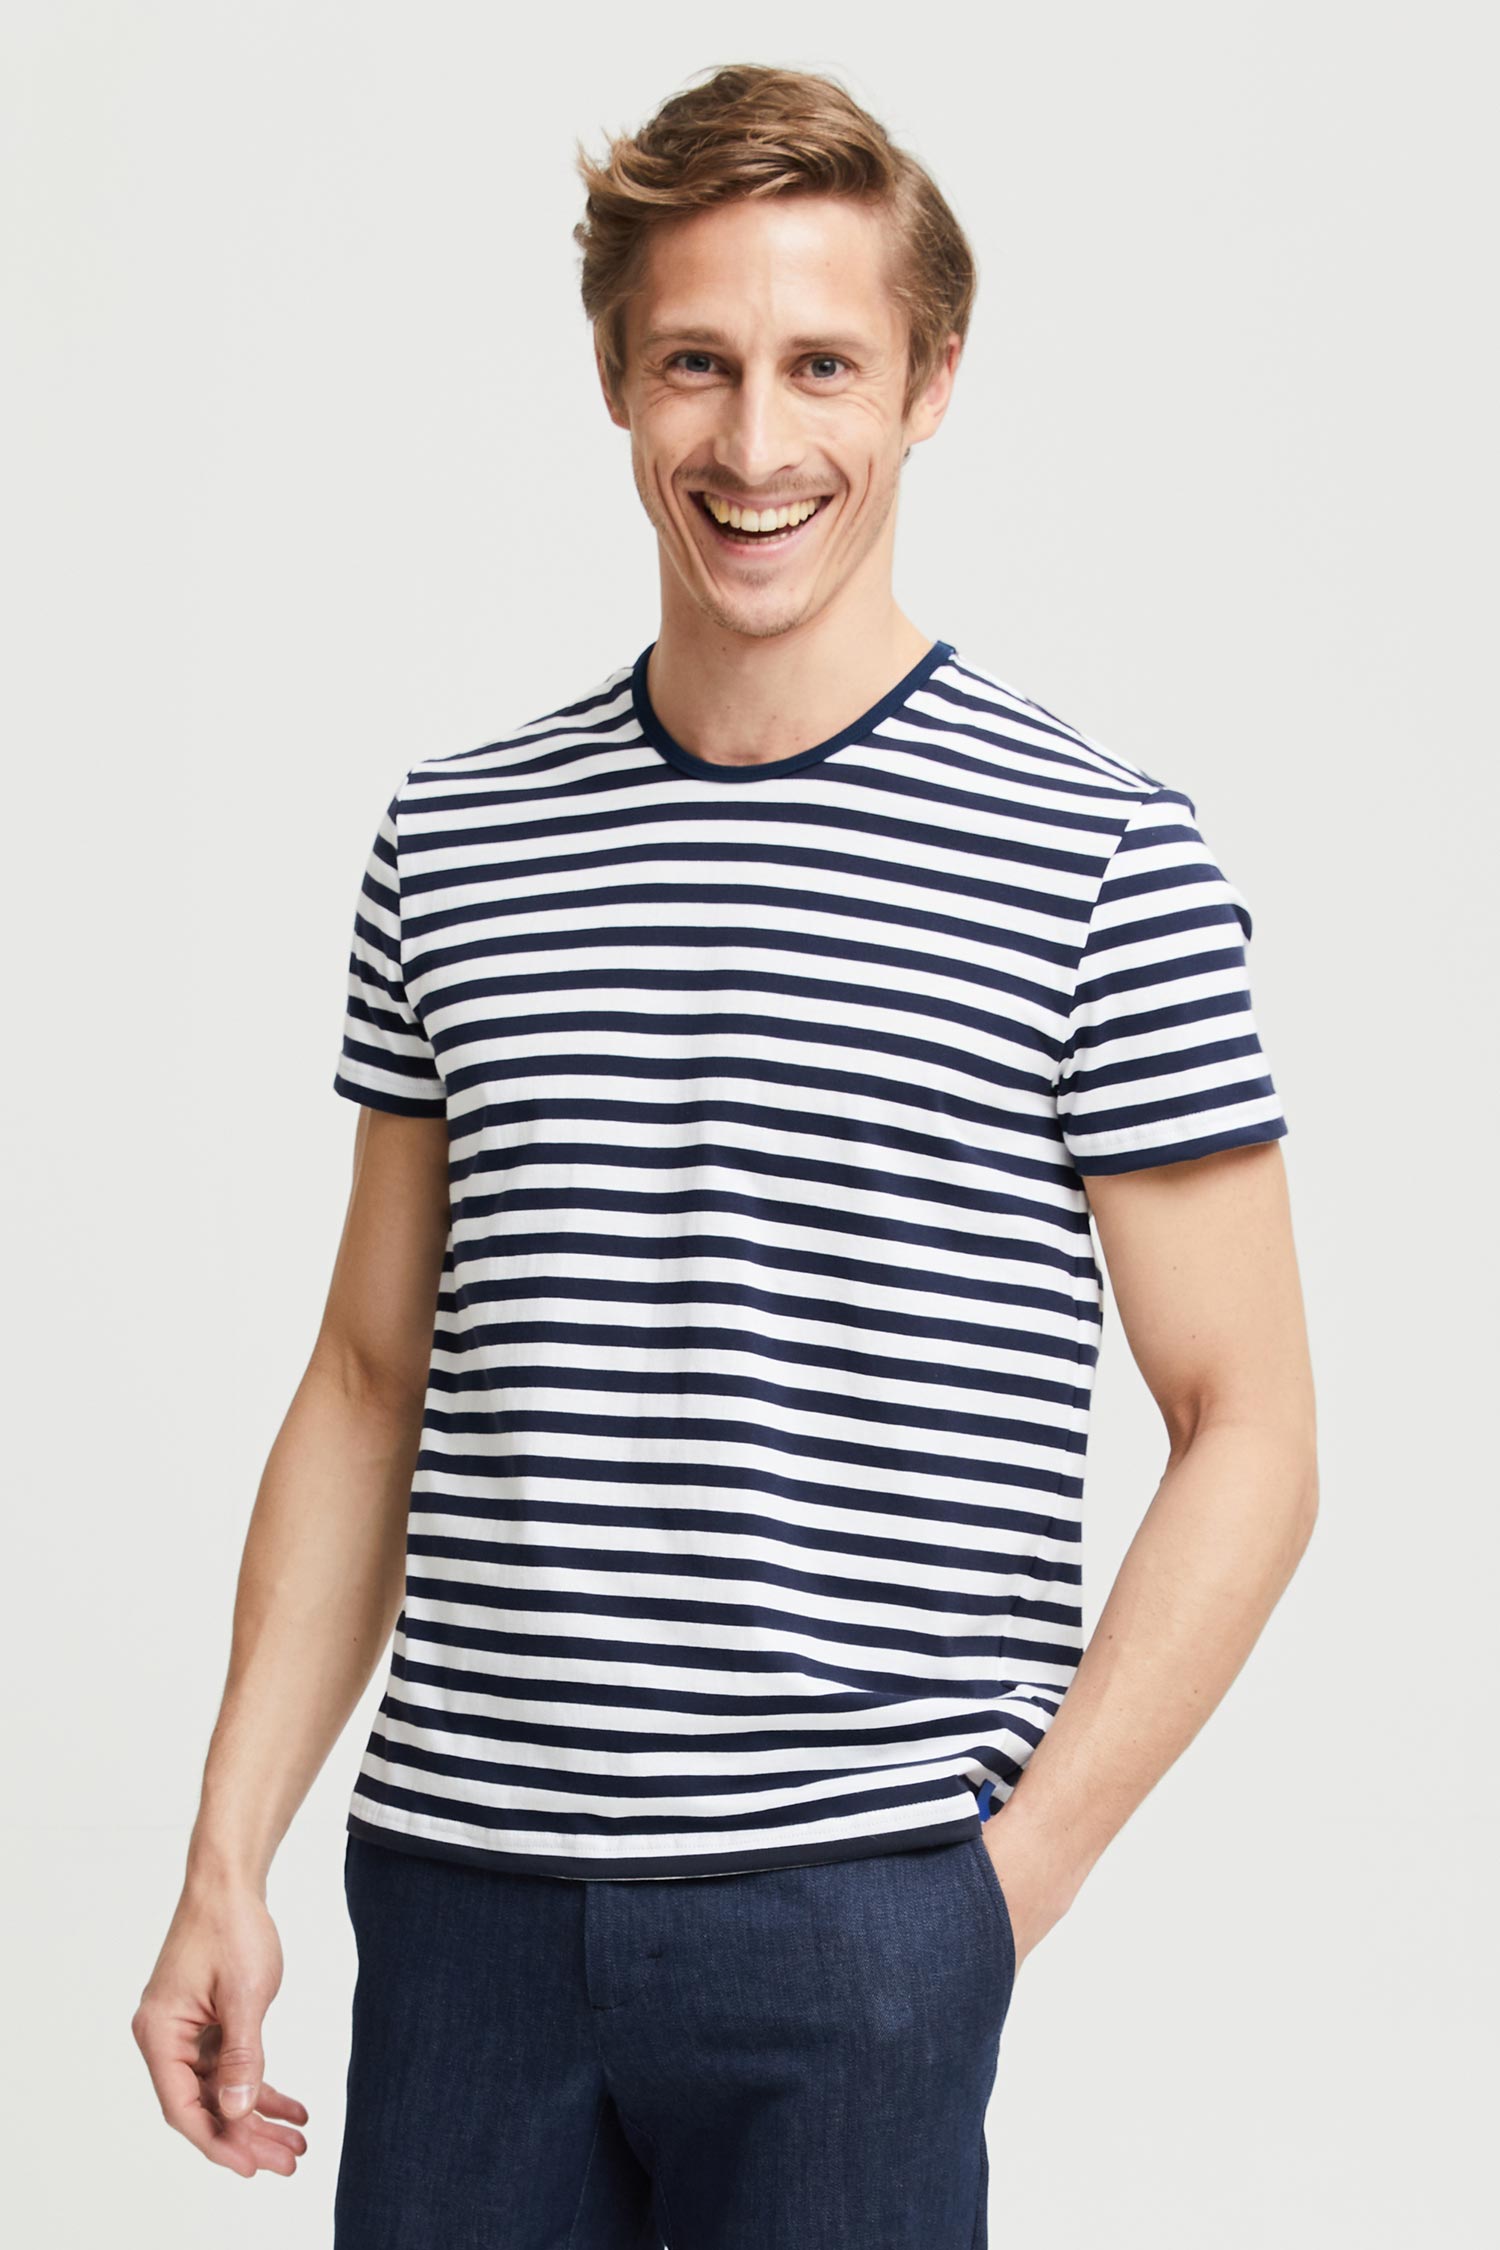 Frenn Hannes sustainable premium quality GOTS organic cotton striped t-shirt blue and white